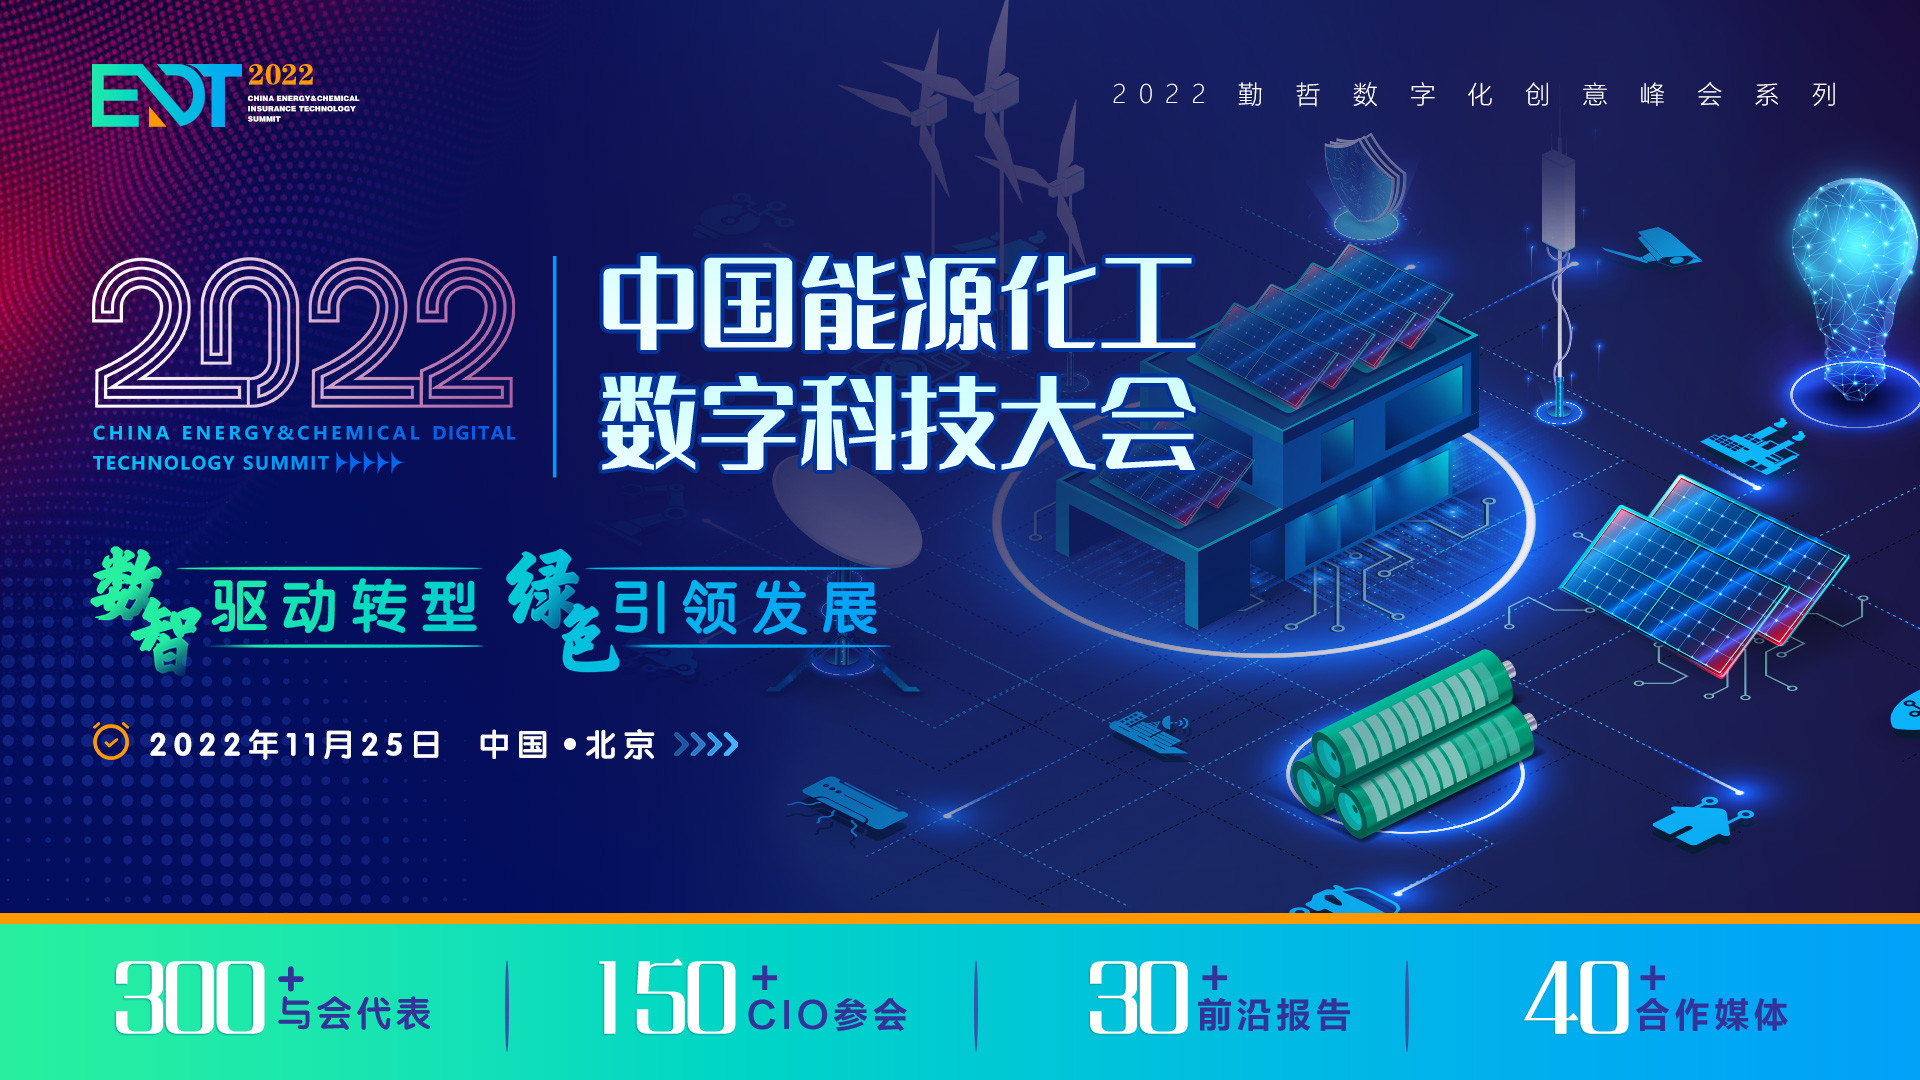 2022 EDT 中國能源化工數字科技大會